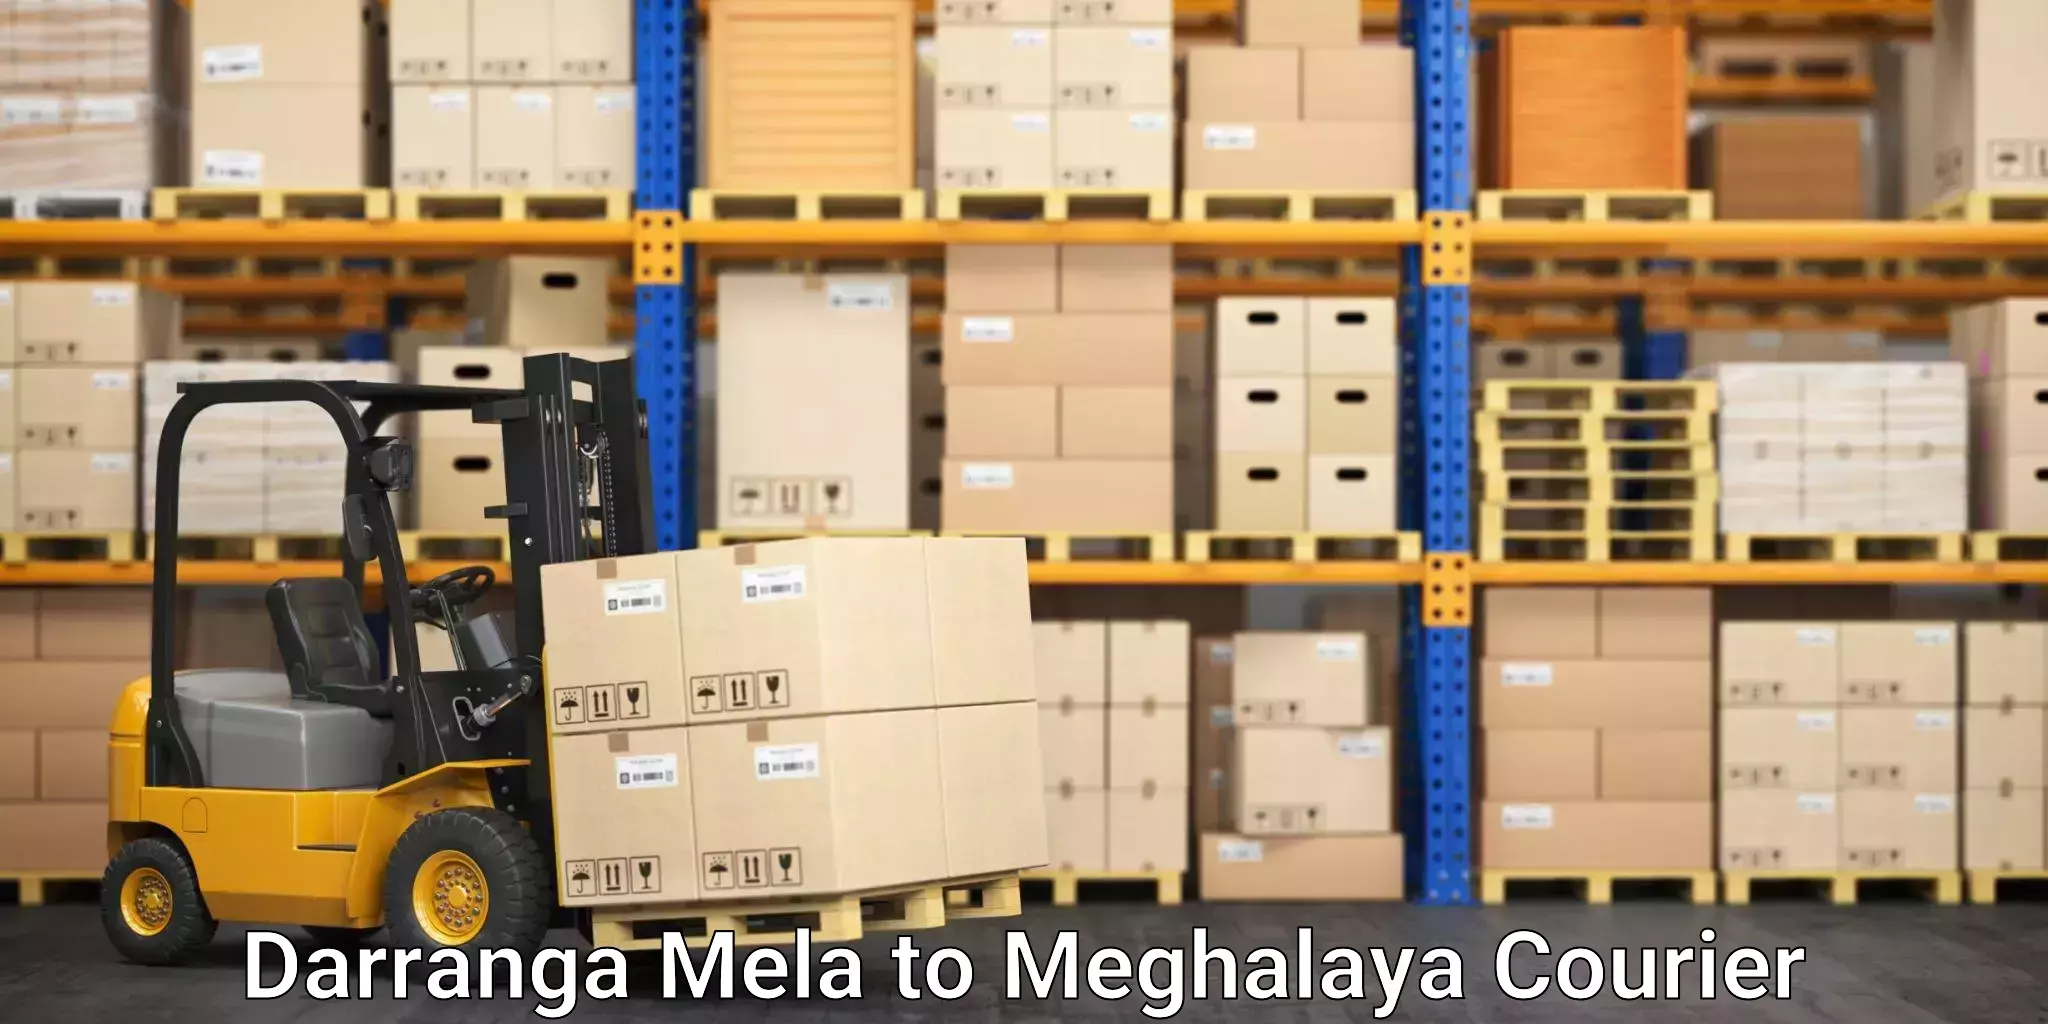 High-capacity courier solutions Darranga Mela to Meghalaya